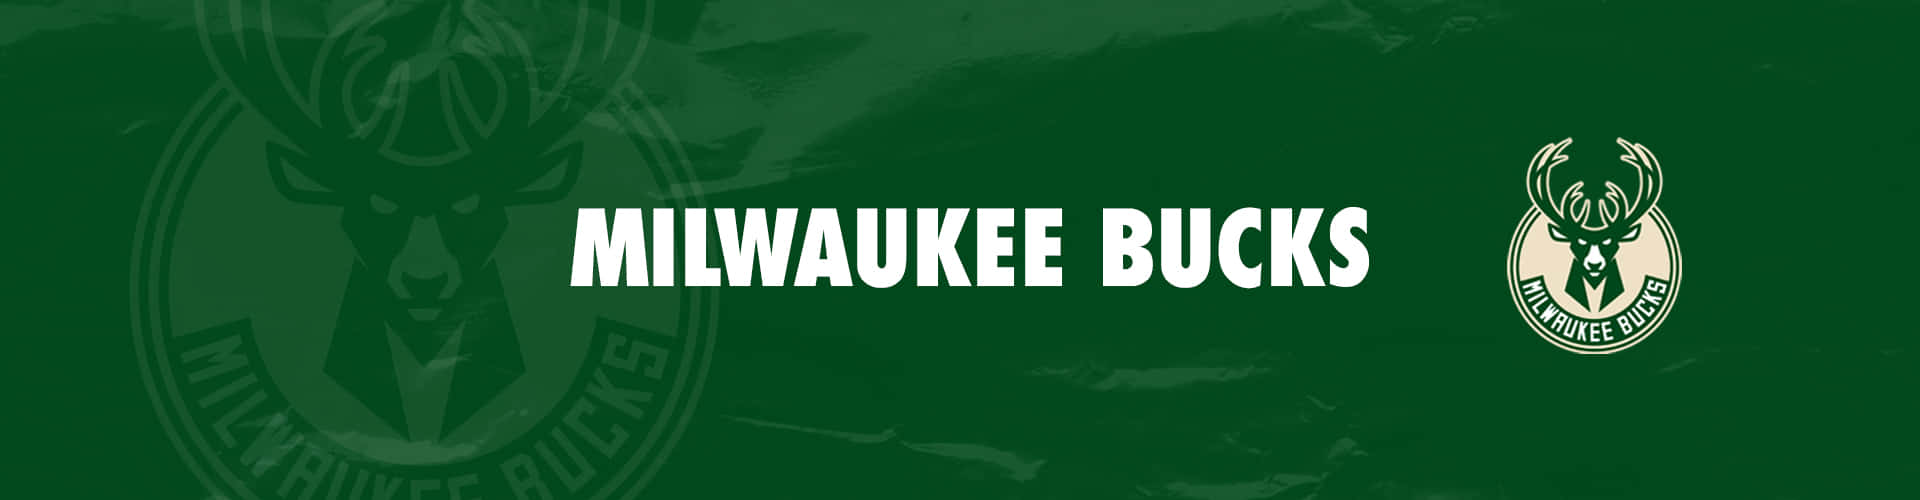 Dasikonische Logo Des Milwaukee Bucks Basketball Teams Wallpaper